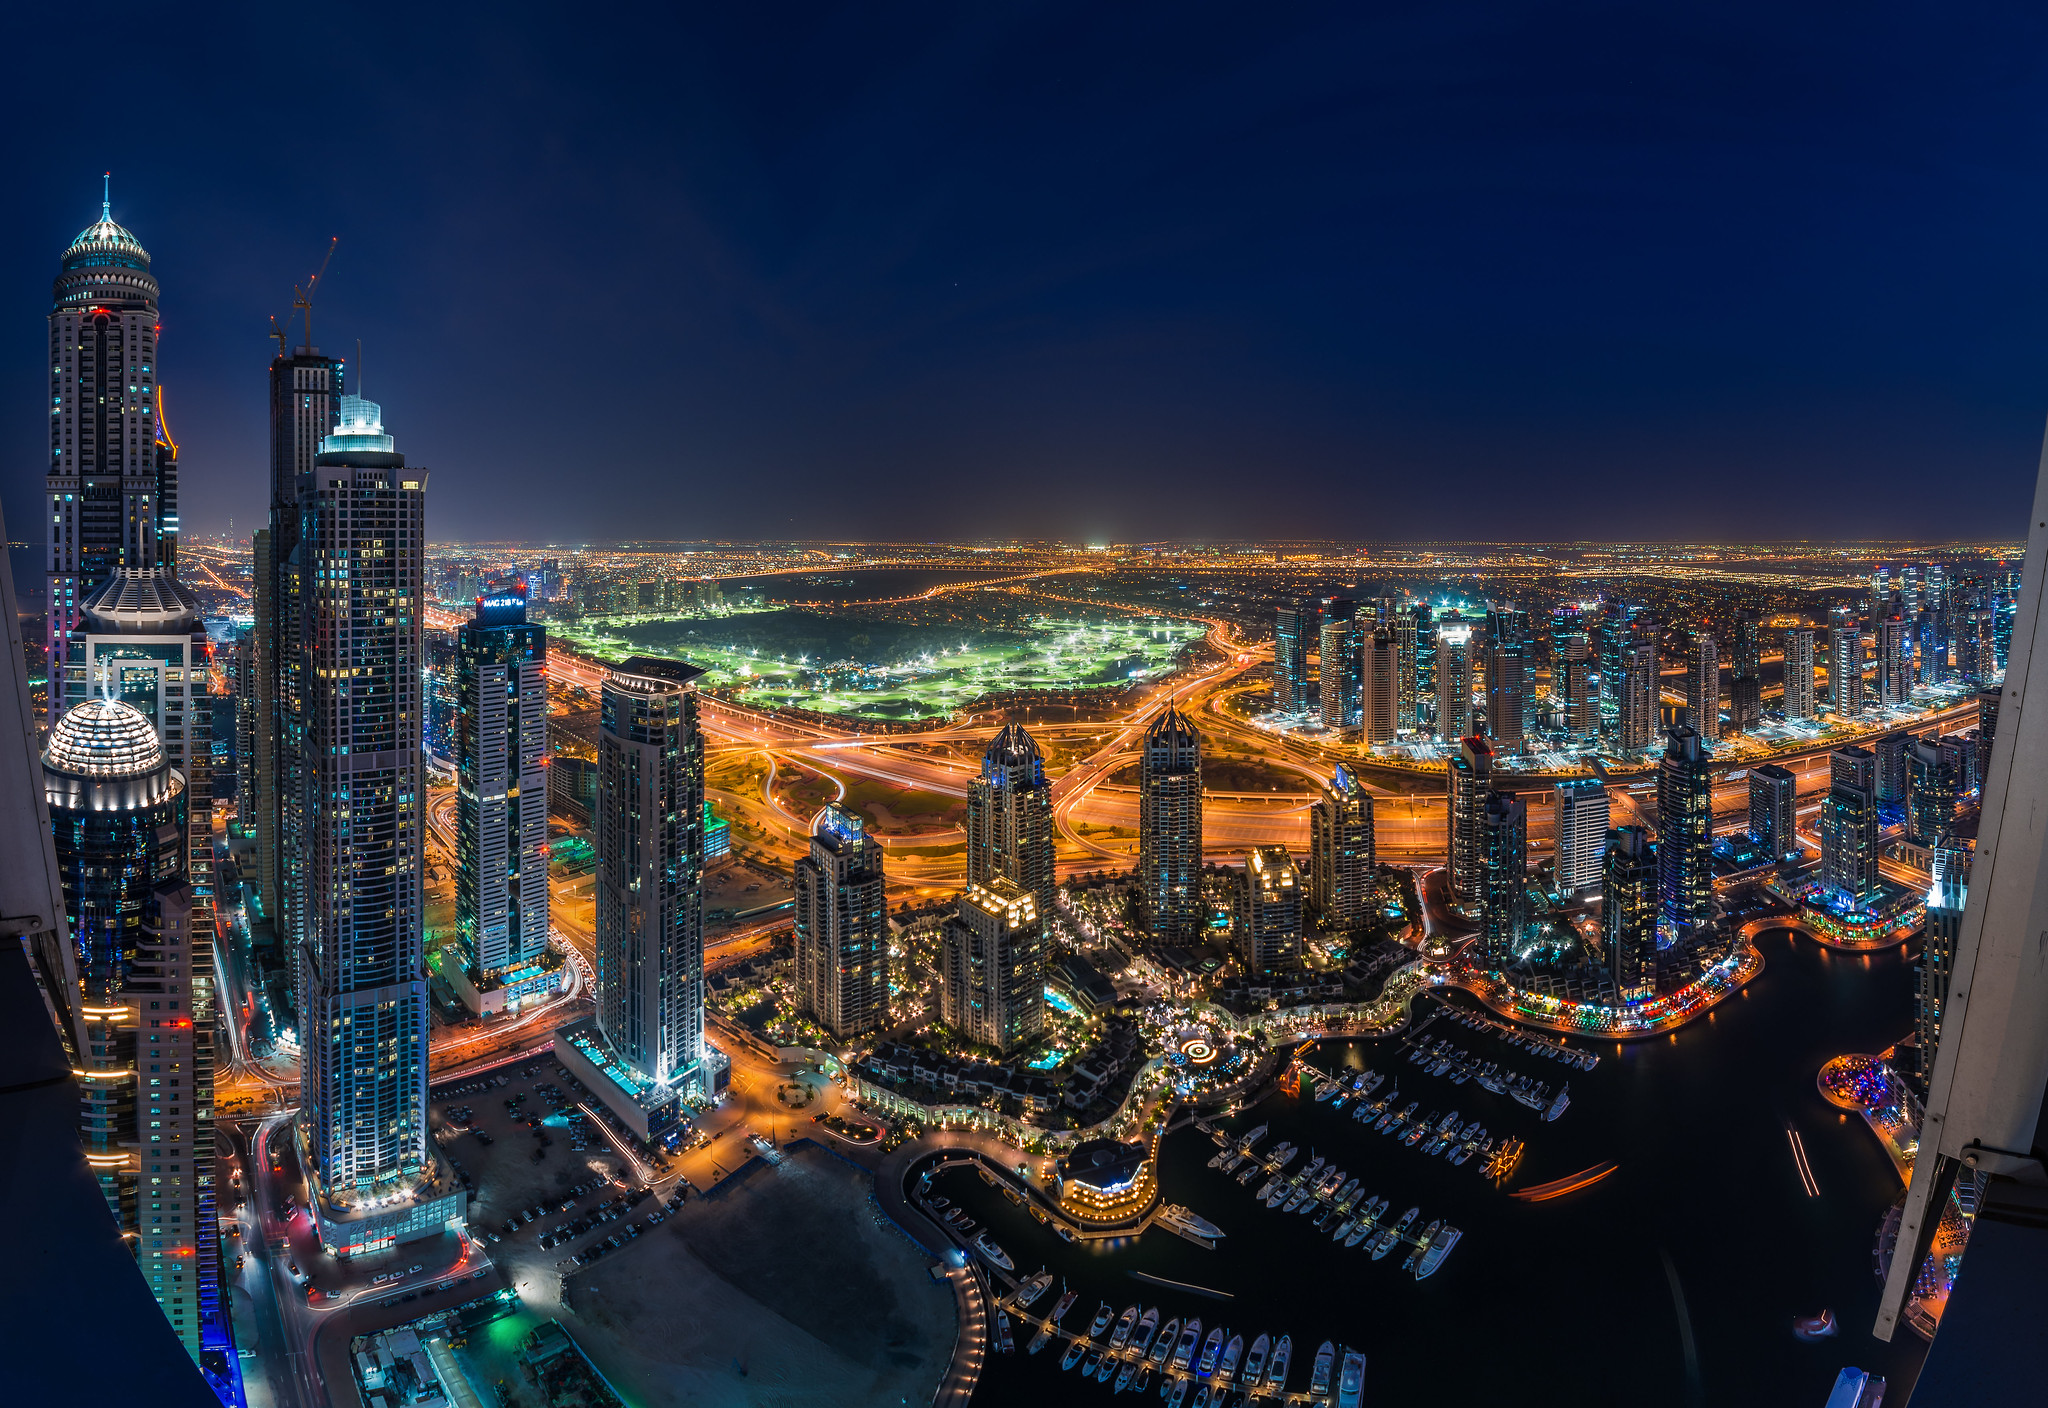 Wallpapers UAE night city on the desktop